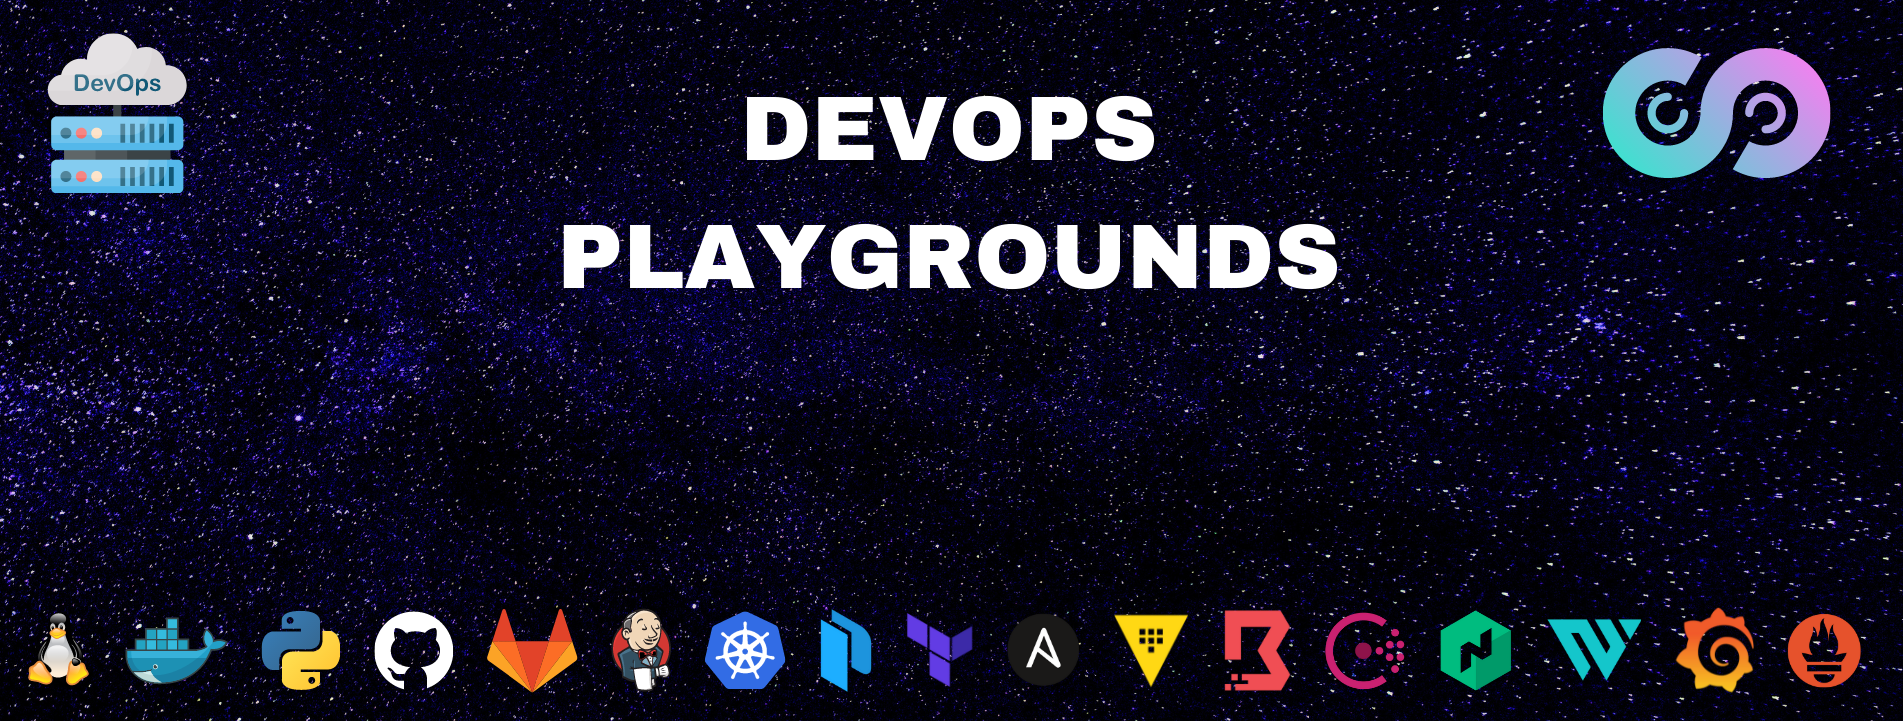 DevOps Playgrounds